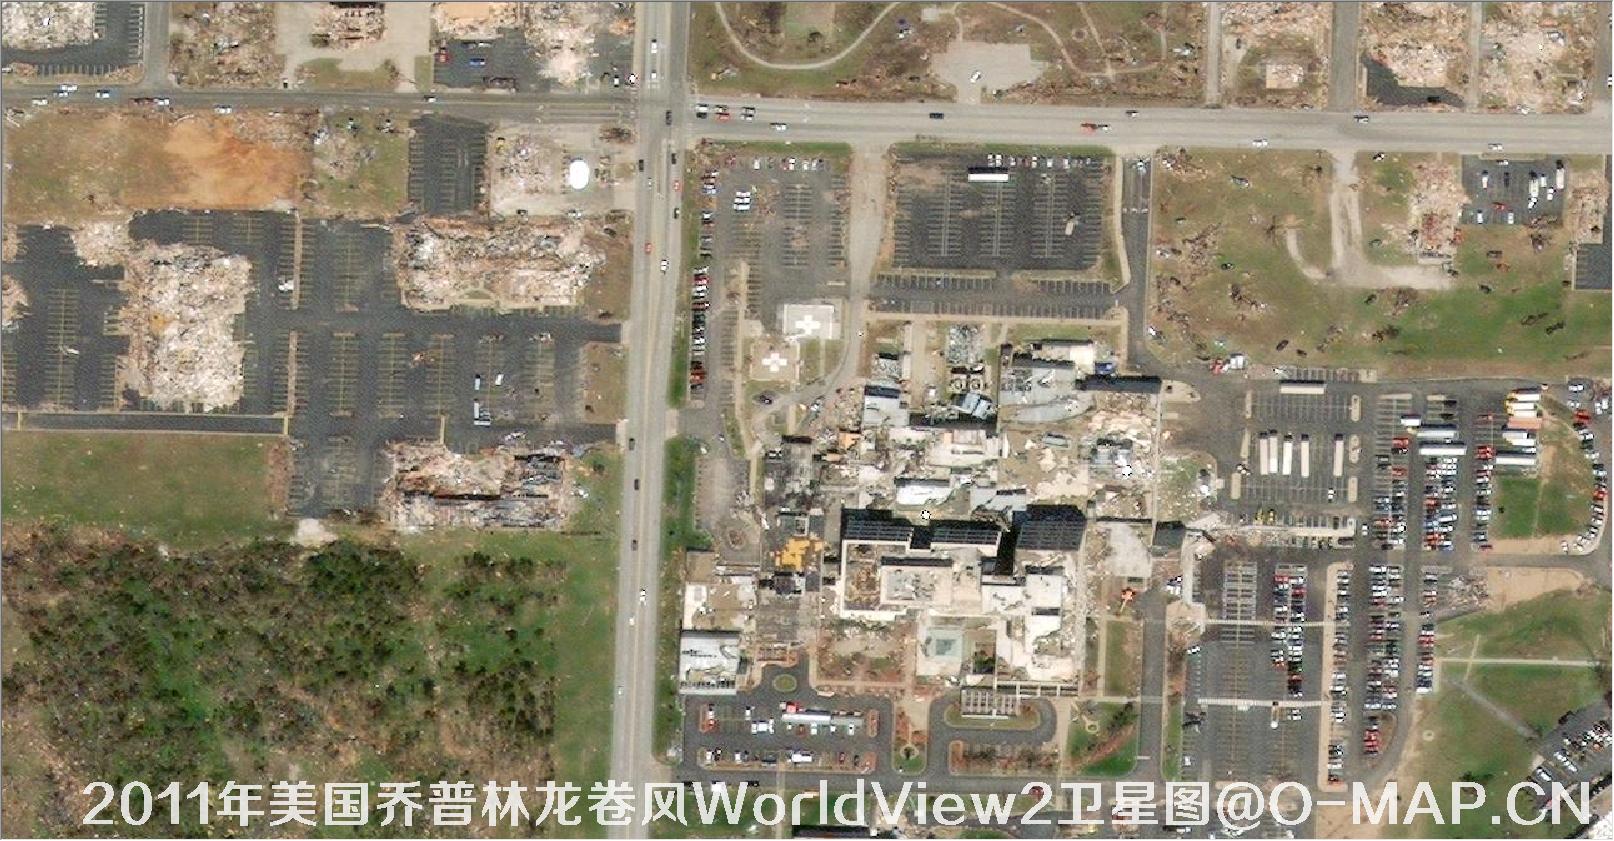 WorldView2卫星拍摄的2011年美国乔普林市龙卷风灾害画面